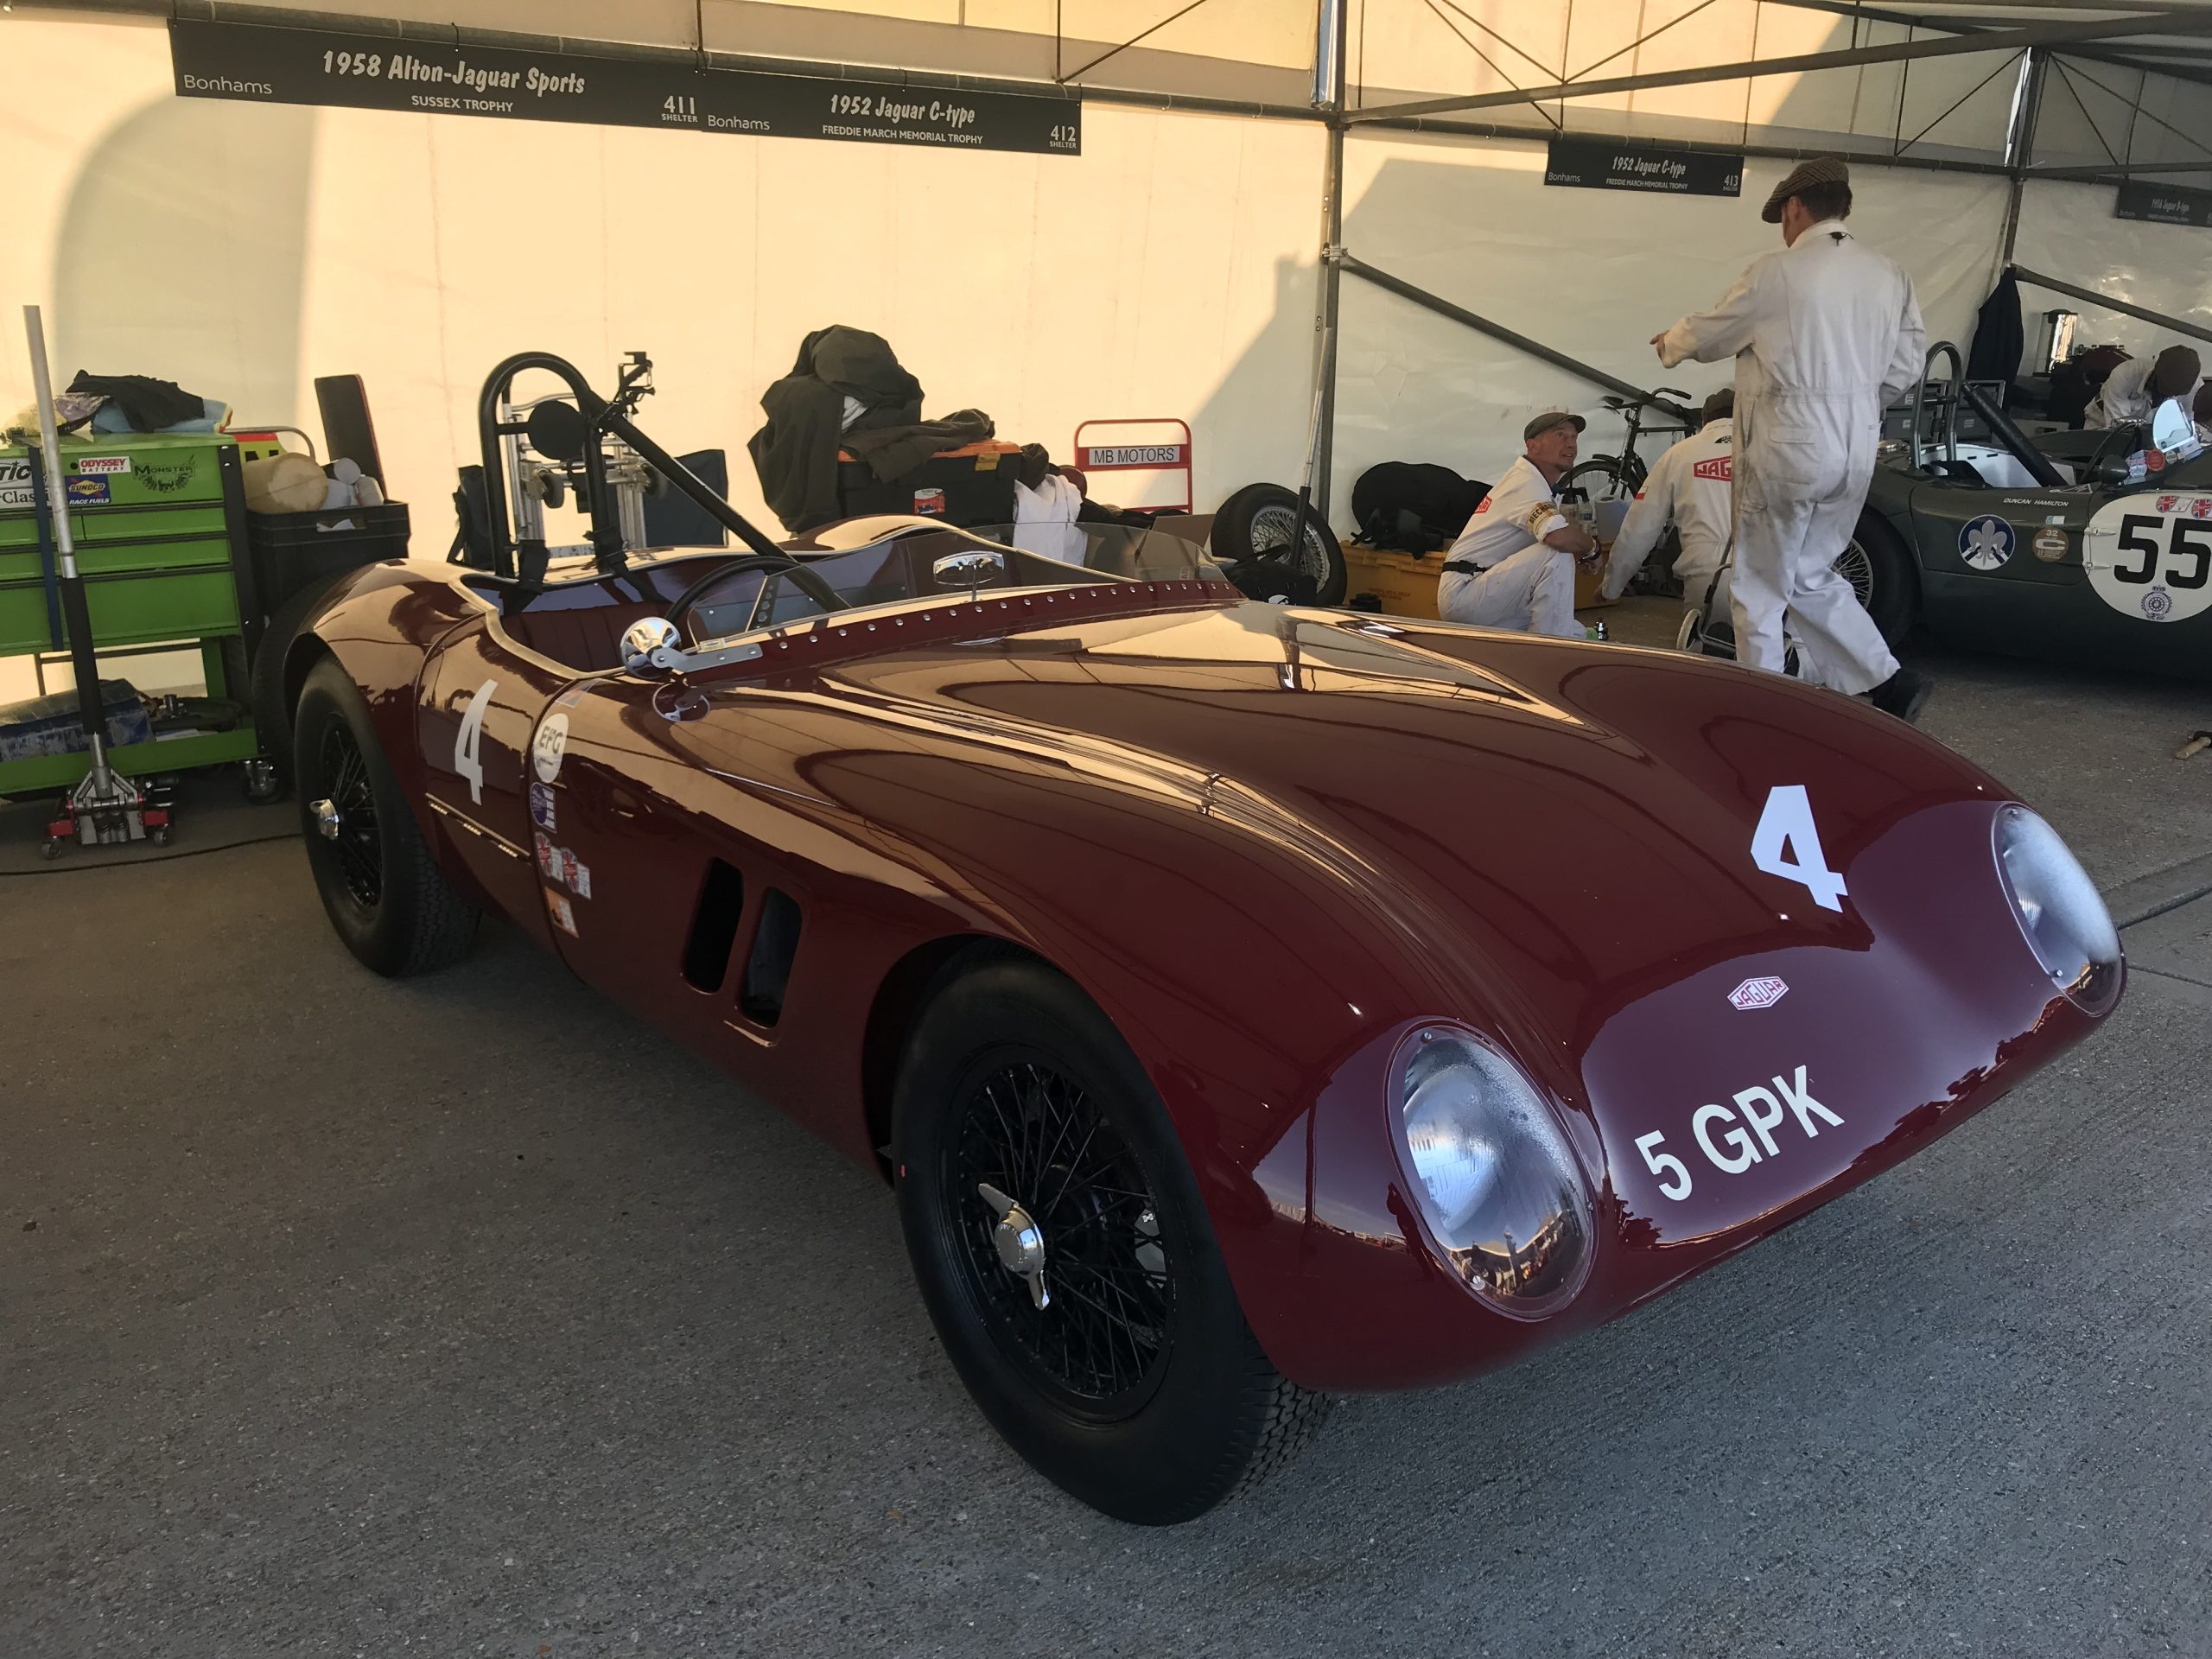 Alton-Jaguar Sports 1958